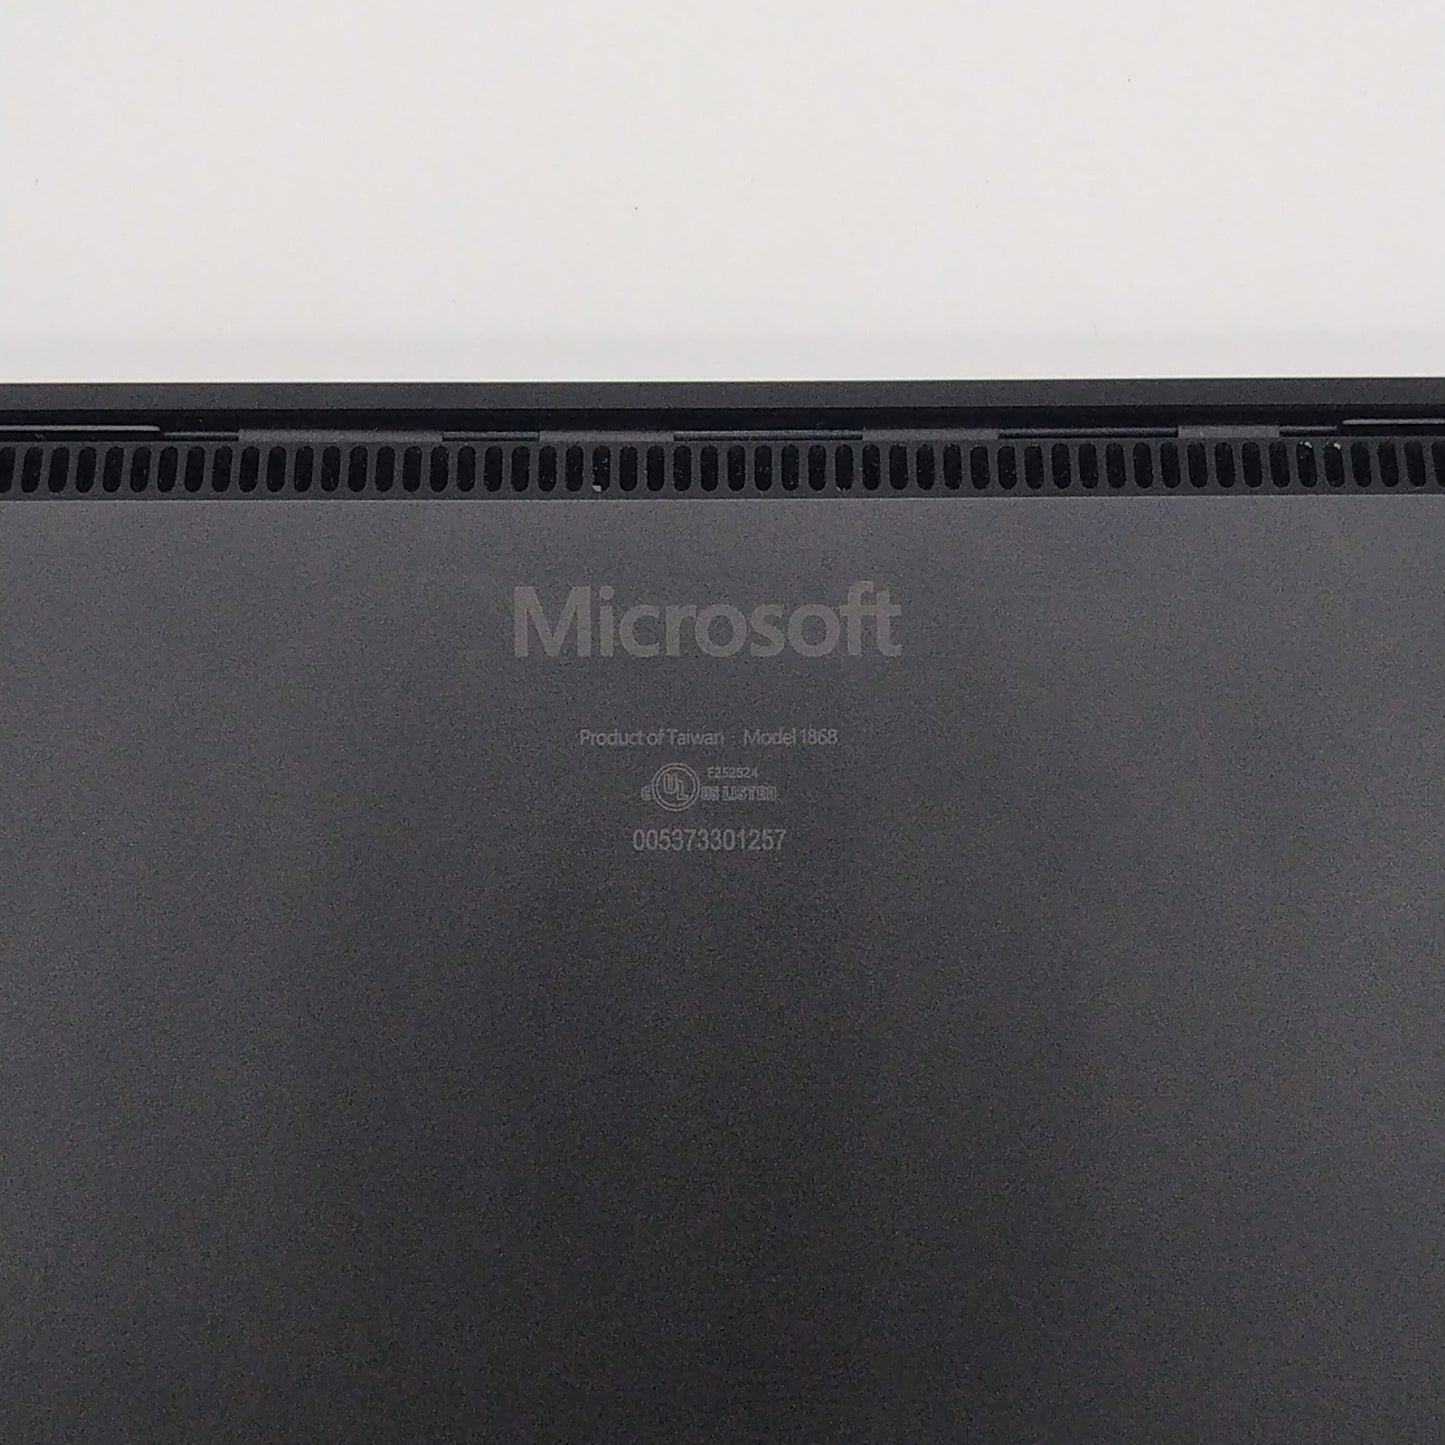 Microsoft Surface Laptop 3 1868 13" i5-1035G7 1.2GHz 8GB RAM 256GB SSD